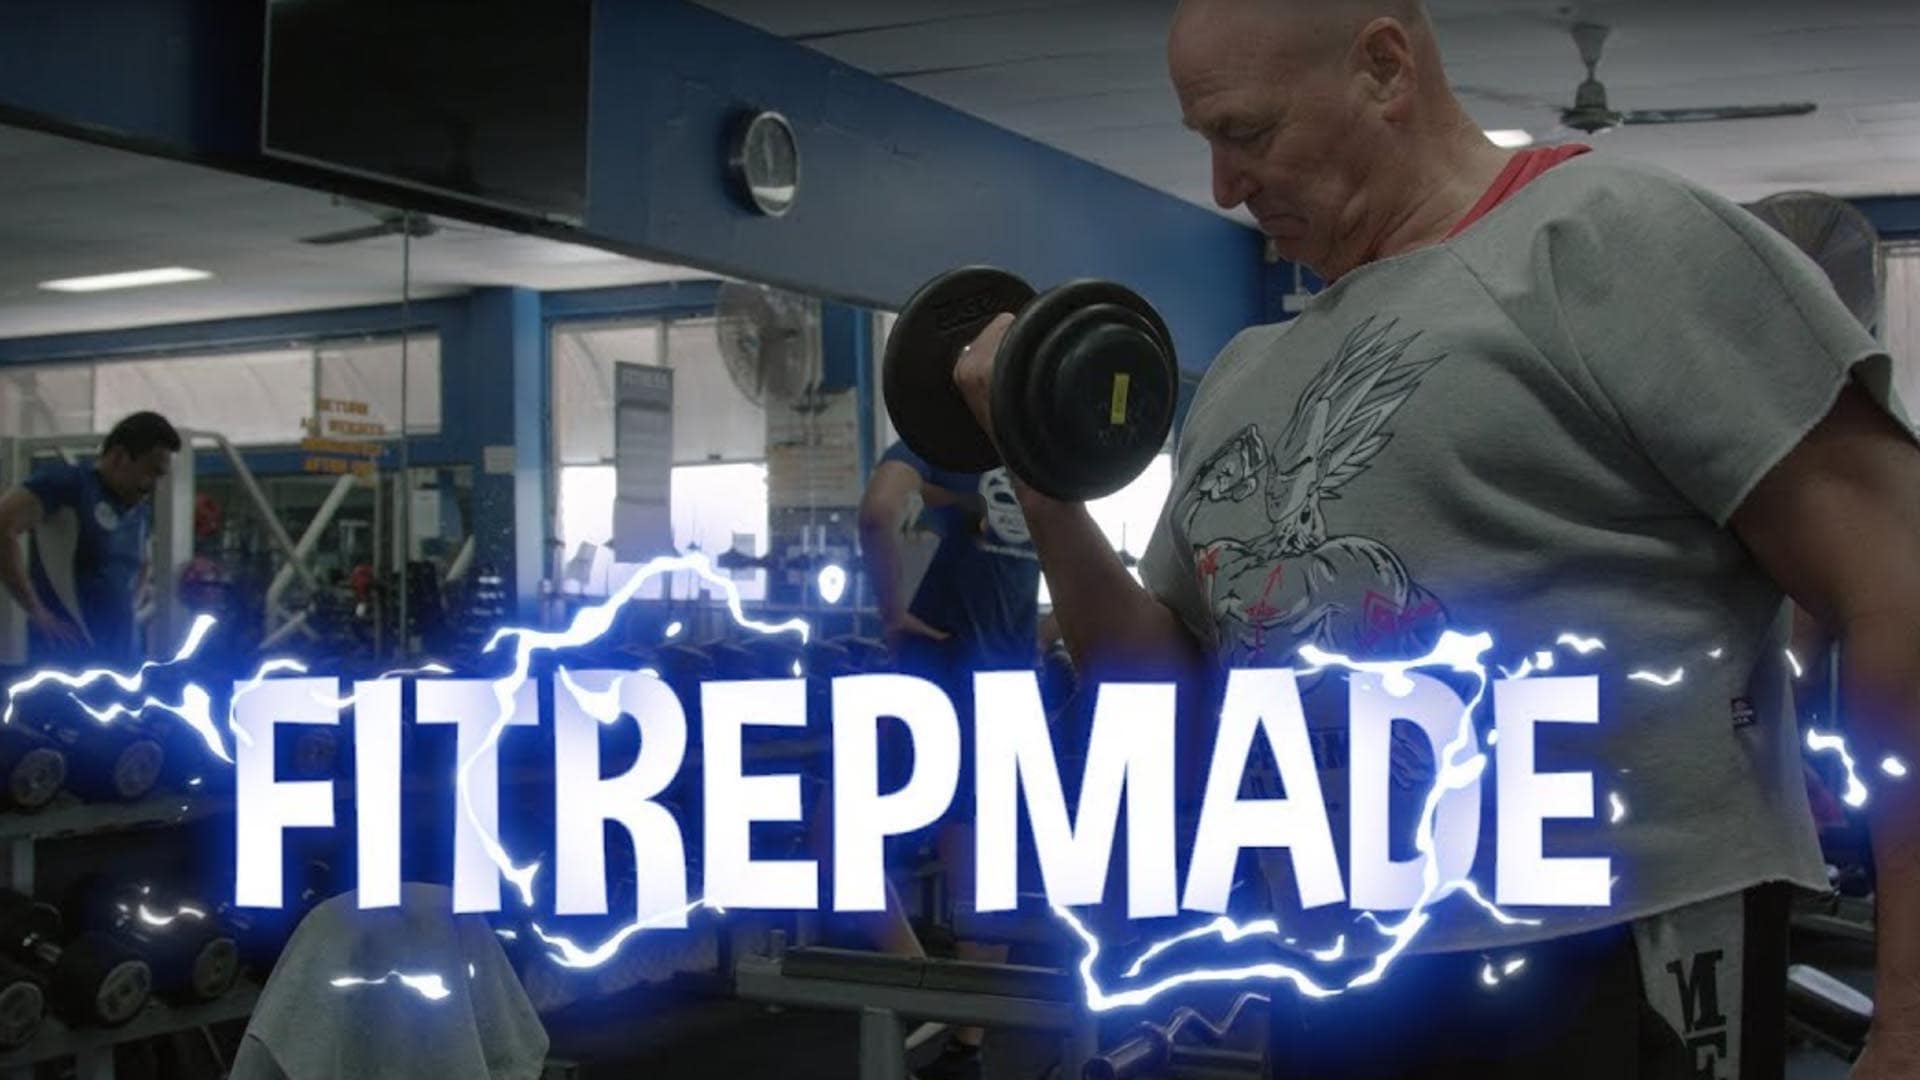 Meet Joe - FITREMADE 14 fitness republic video series online